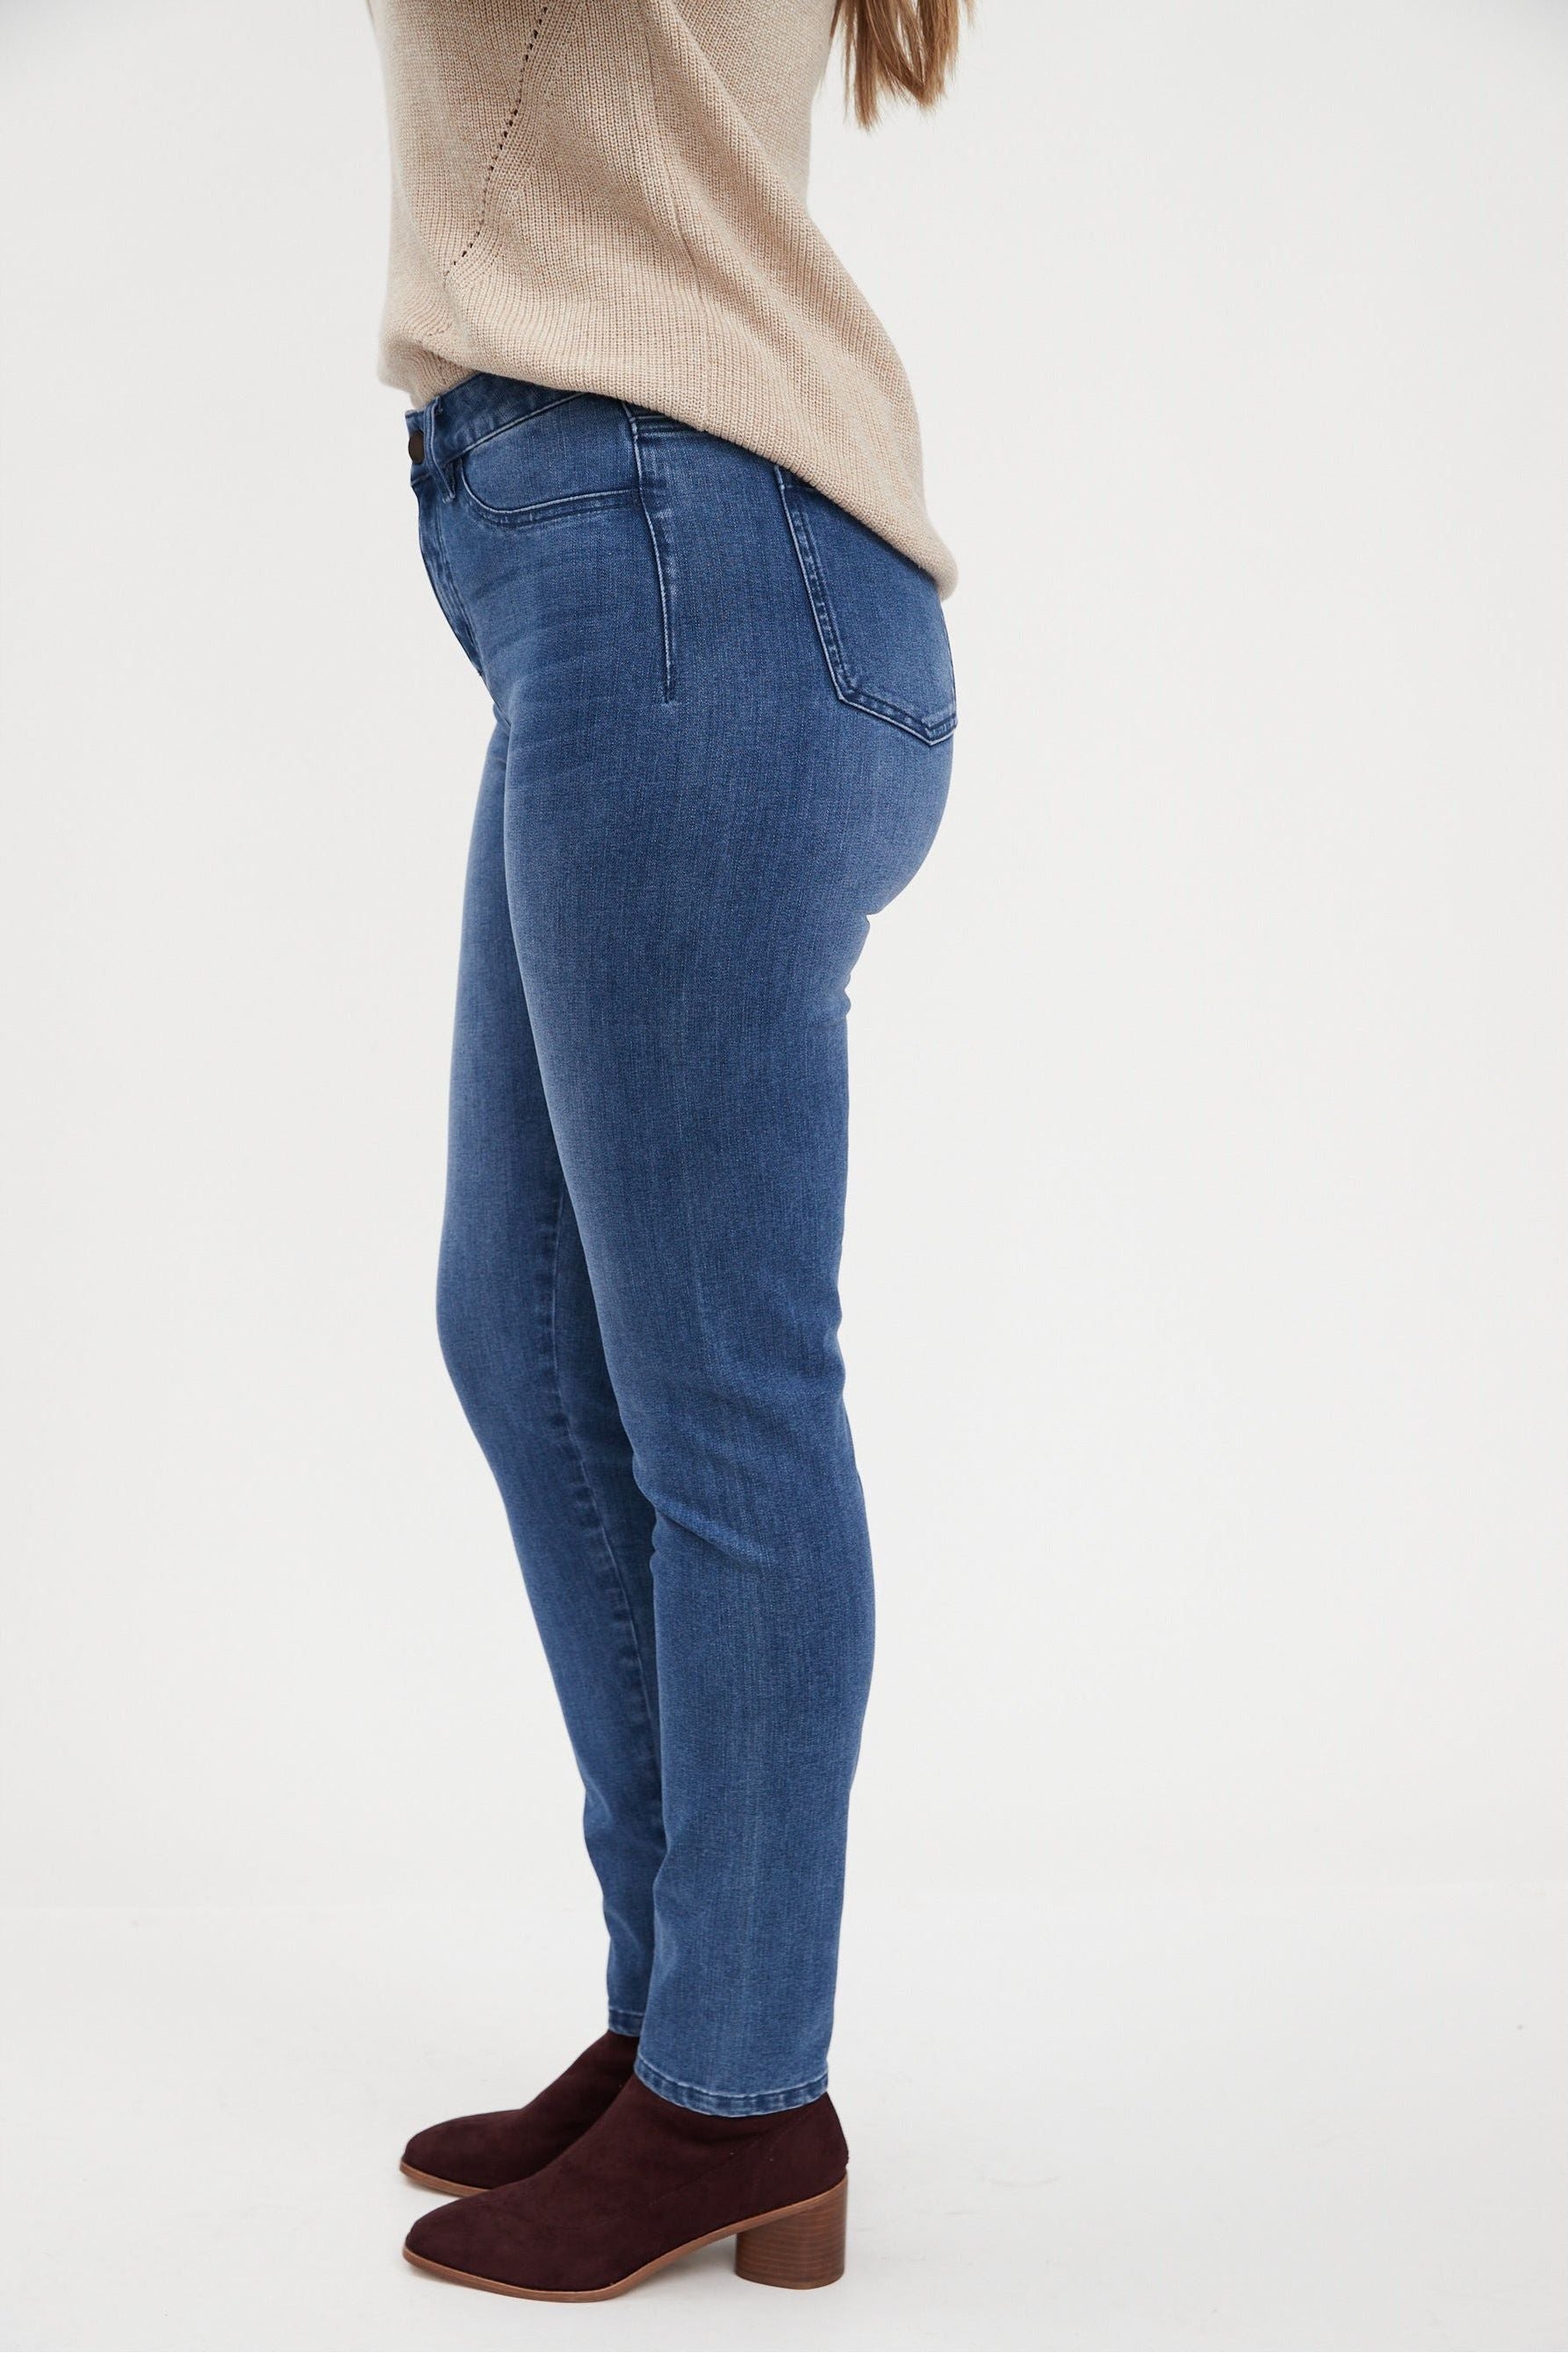 FDJ Olivia Seamless Stretch Jeans - Style 2337902, side